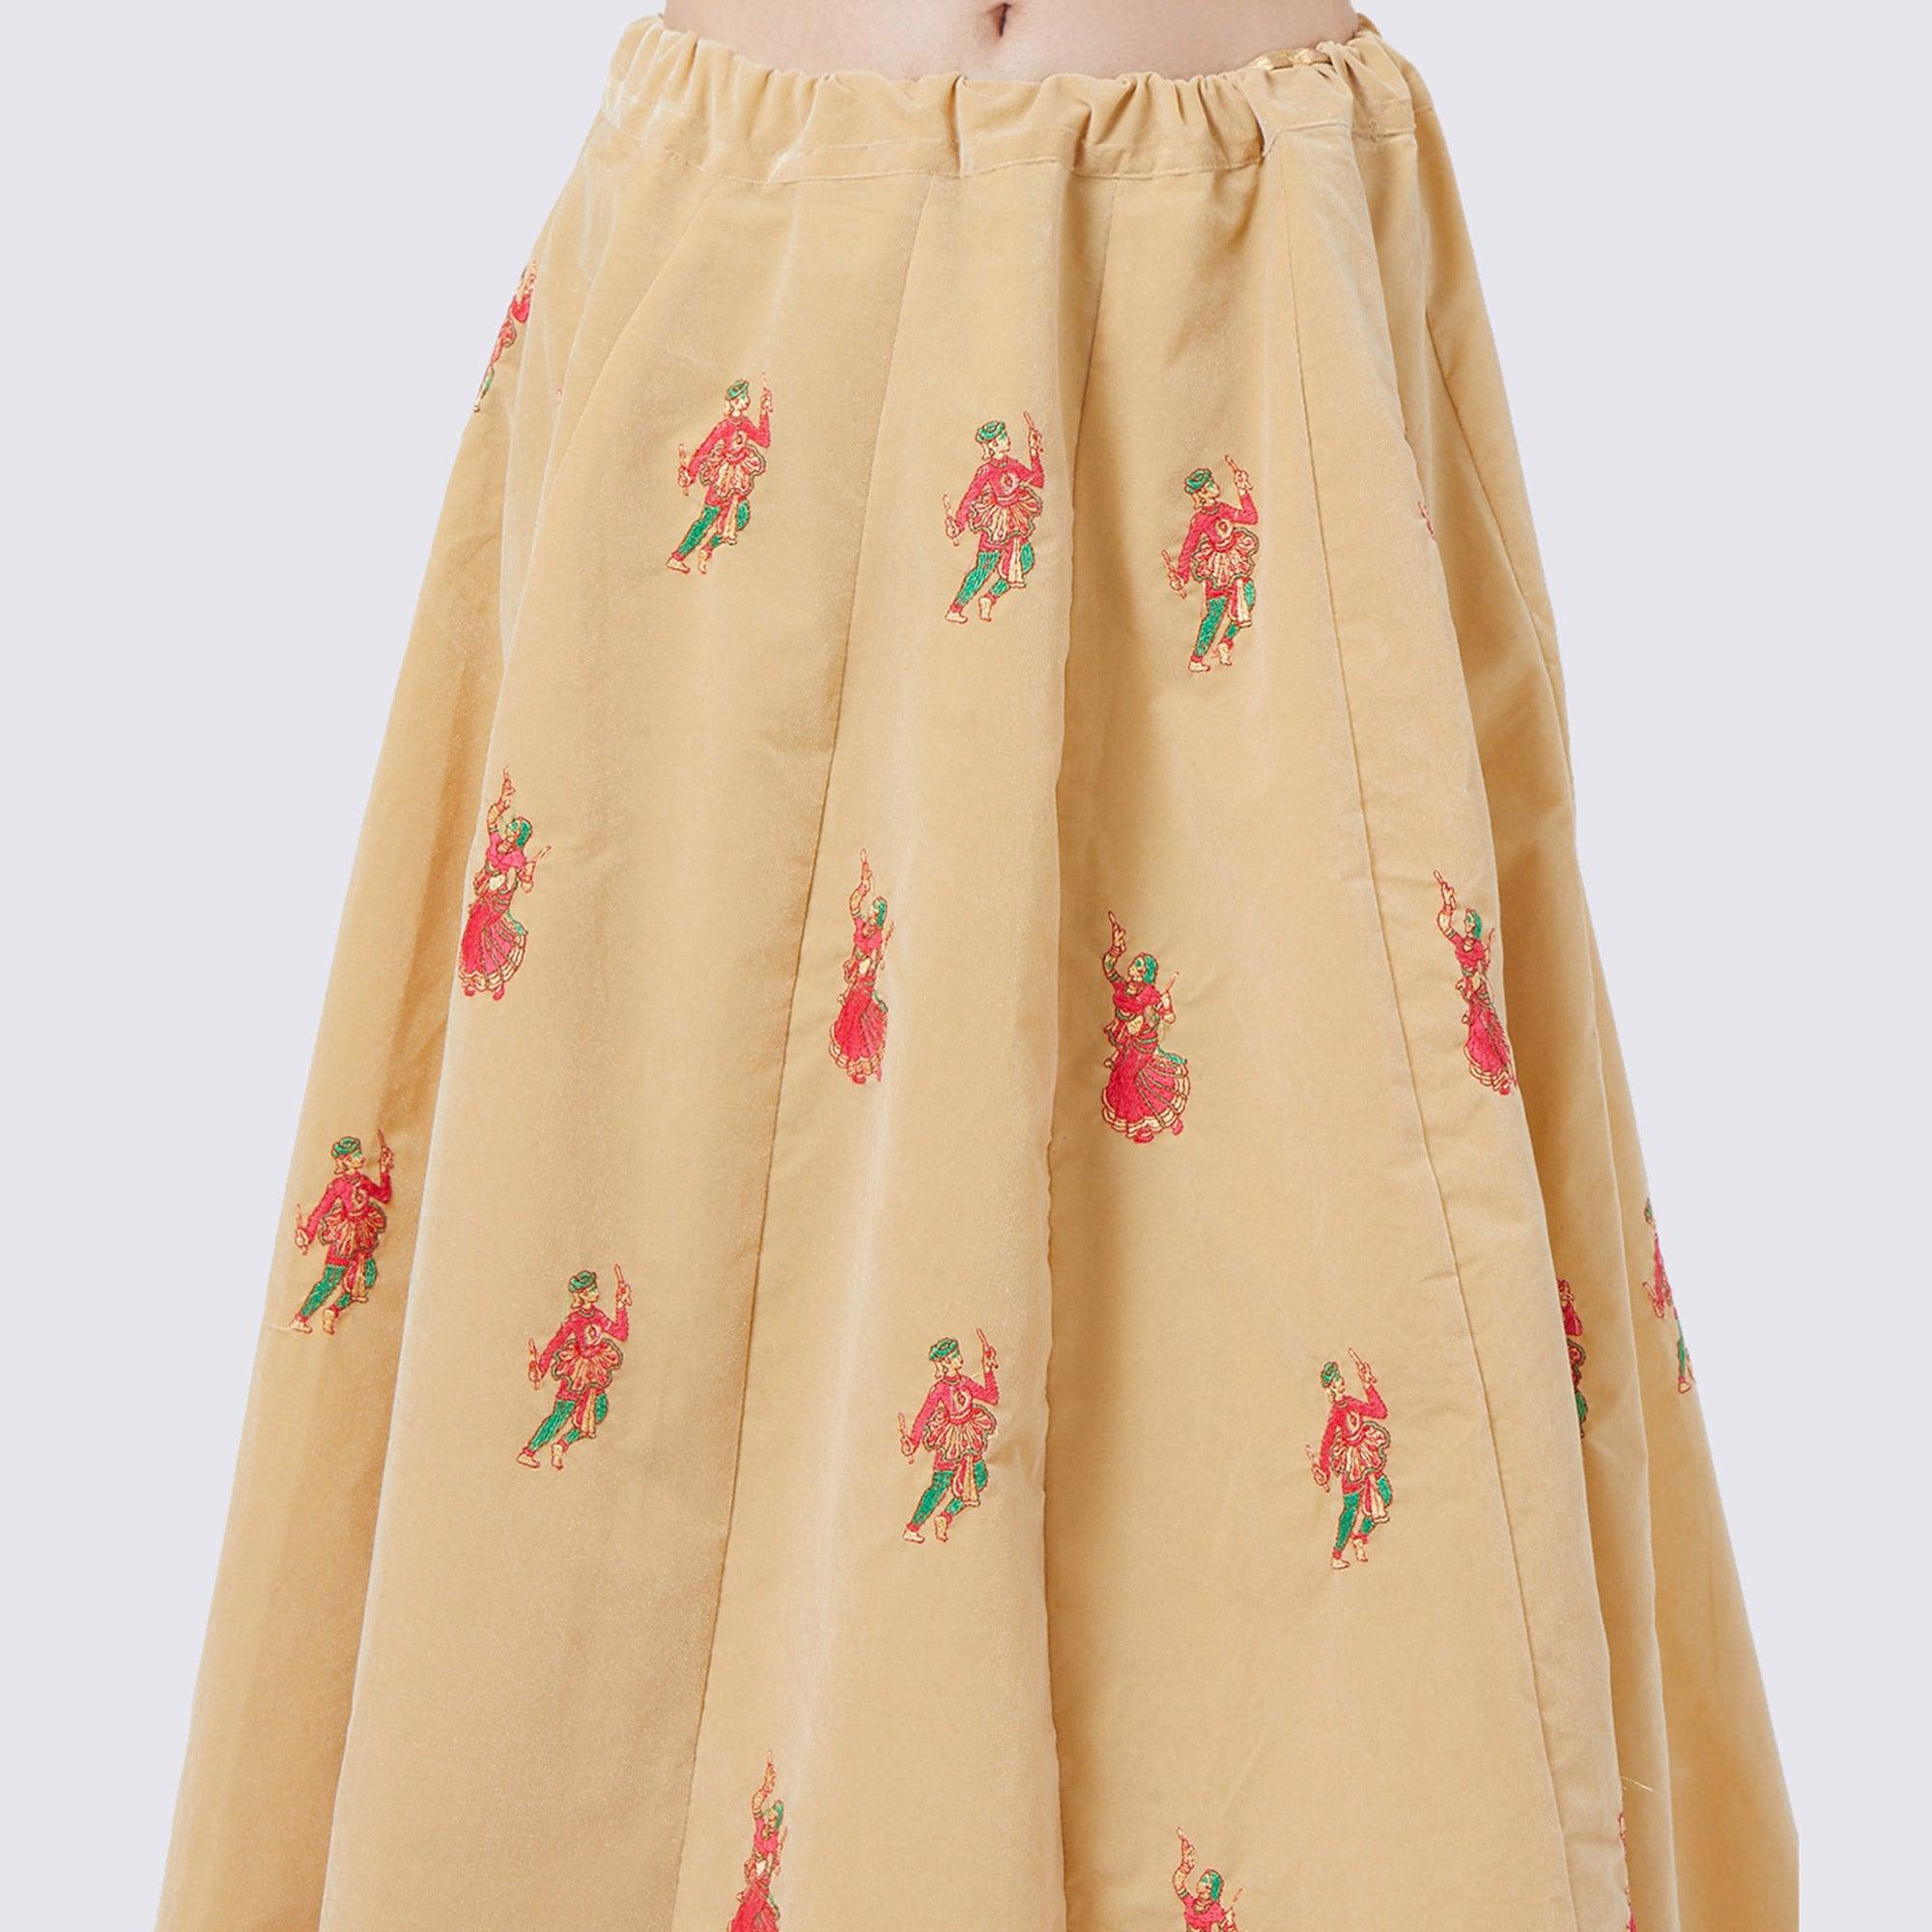 Appealing Cream Colored Partywear Embroidered Velvet Lehenga Choli - Peachmode